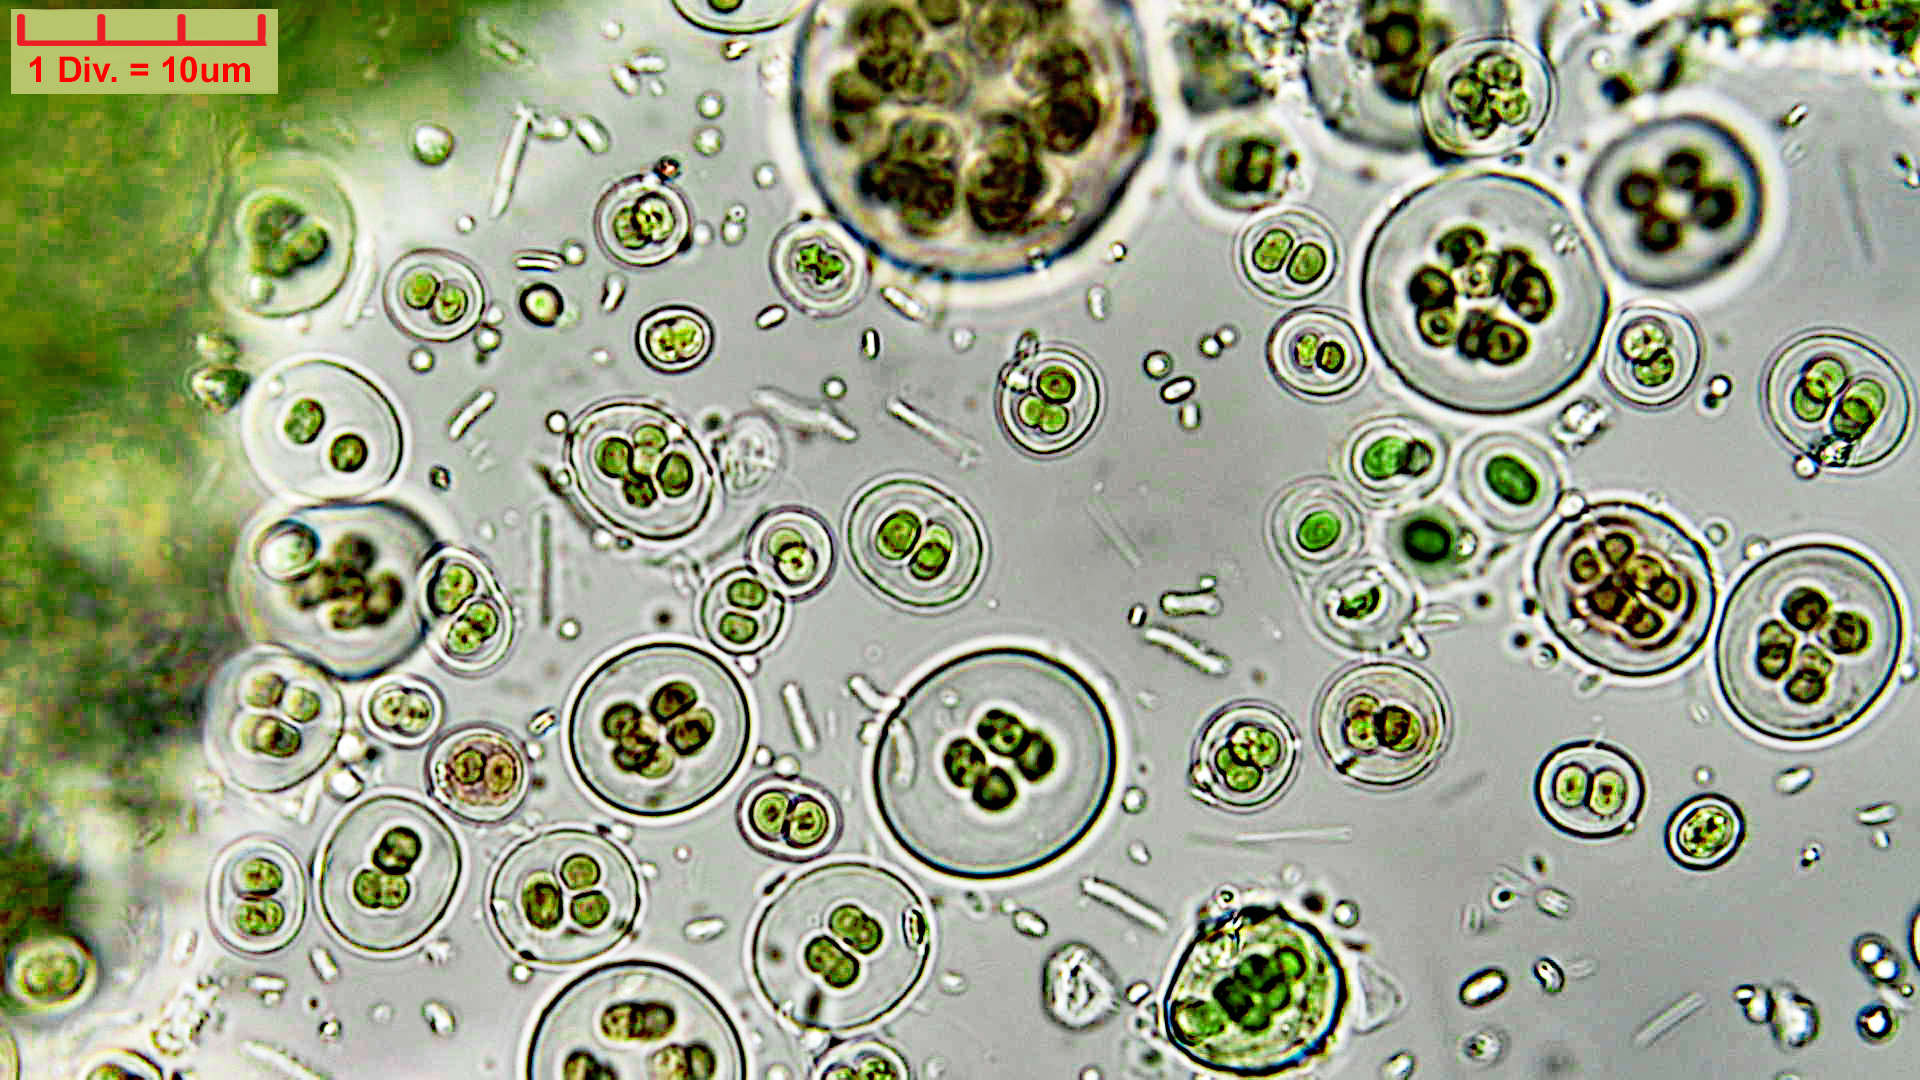 ././././Cyanobacteria/Chroococcales/Chroococcaceae/Gloeocapsa/atrata/gloeocapsa-atrata-31.jpg